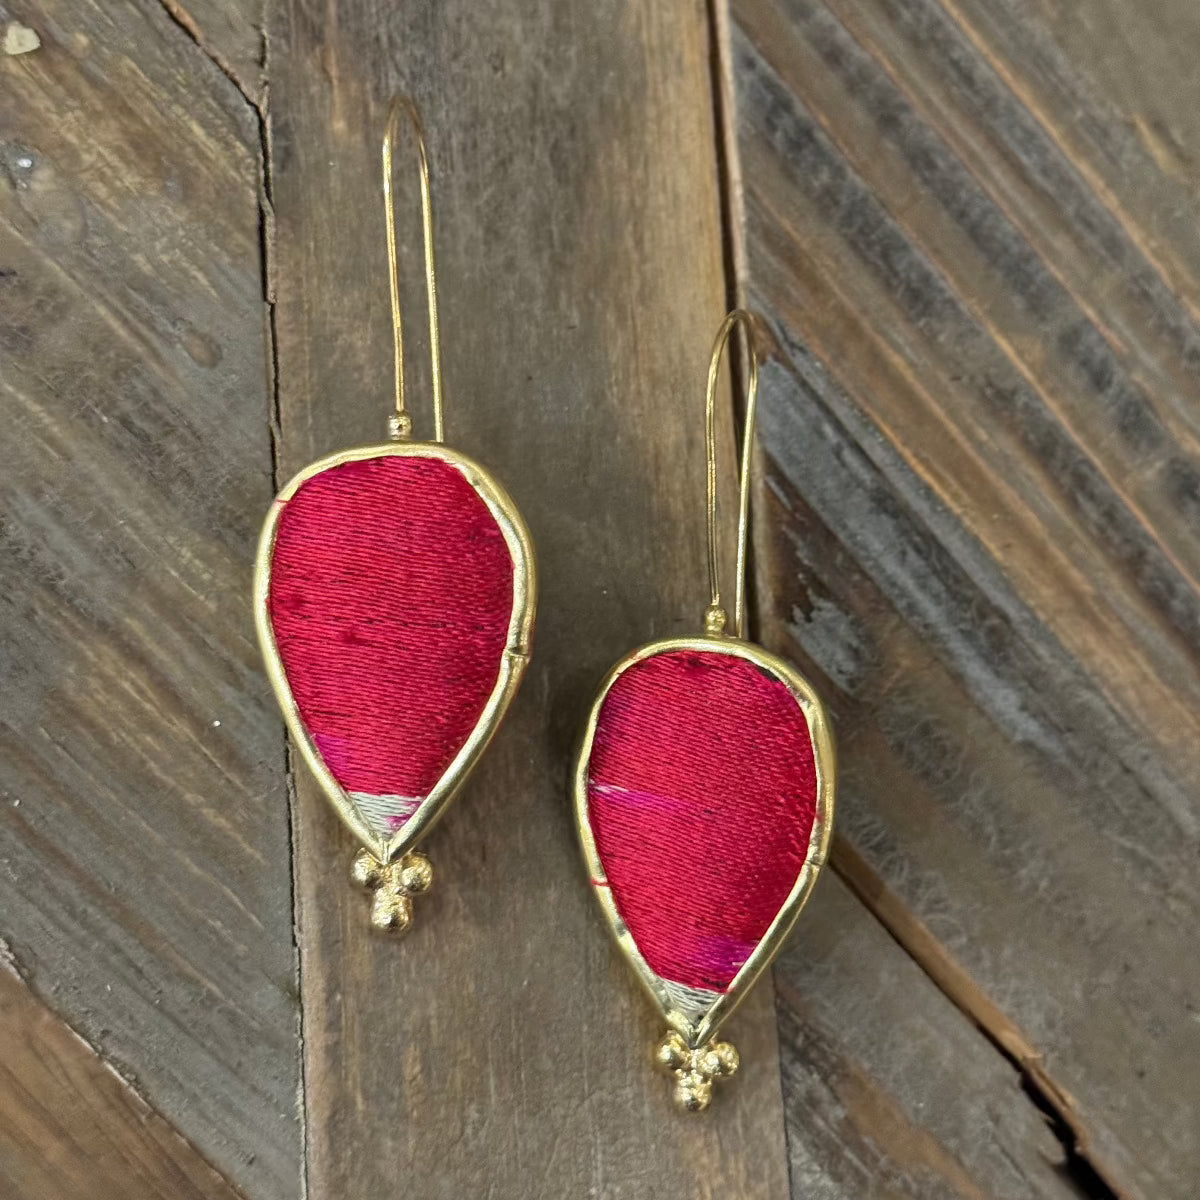 Hand Crafted Ottoman Vintage Textile Earrings - Teardrop New Jewelry Eyup Gunduz J 